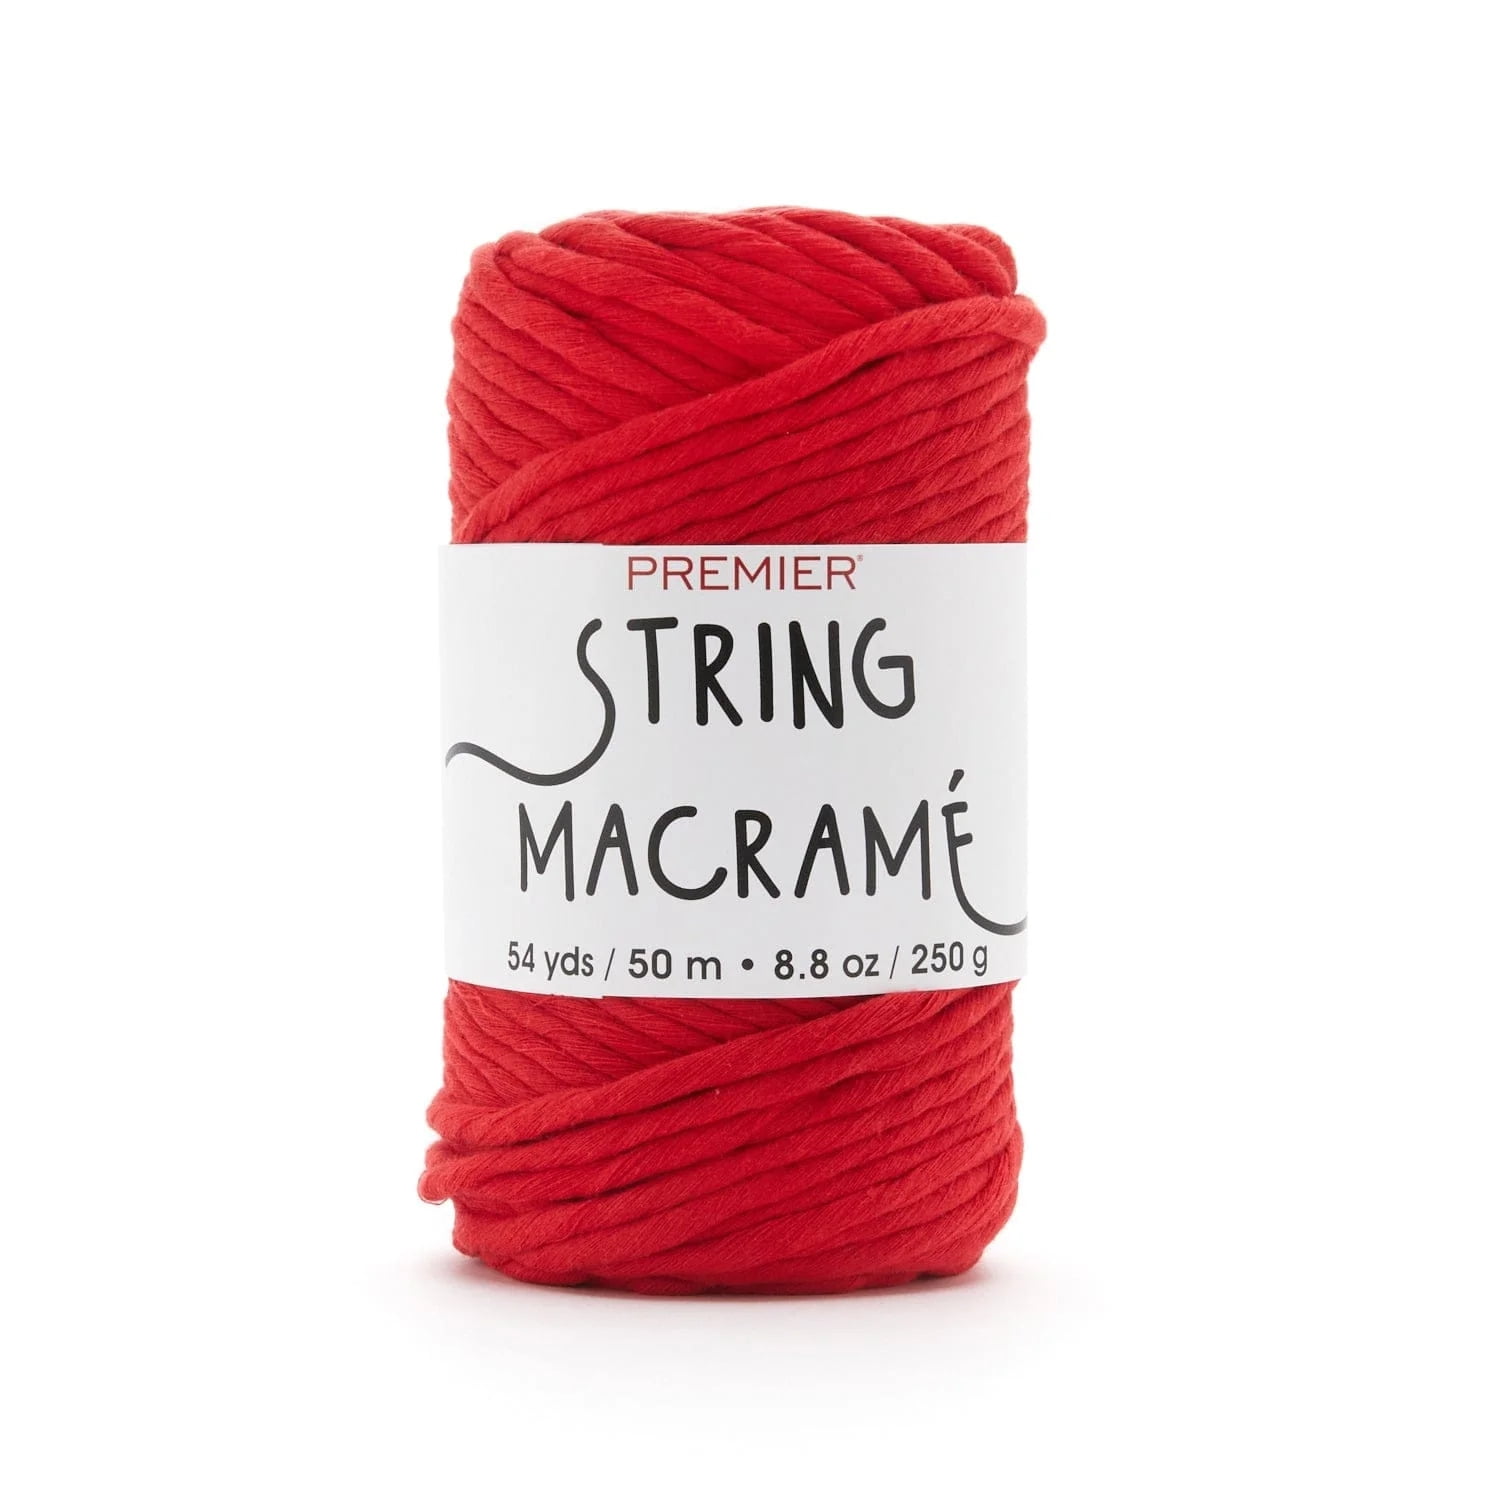 Macramé Cord Supplies – Where to Buy and How to Choose Macramé